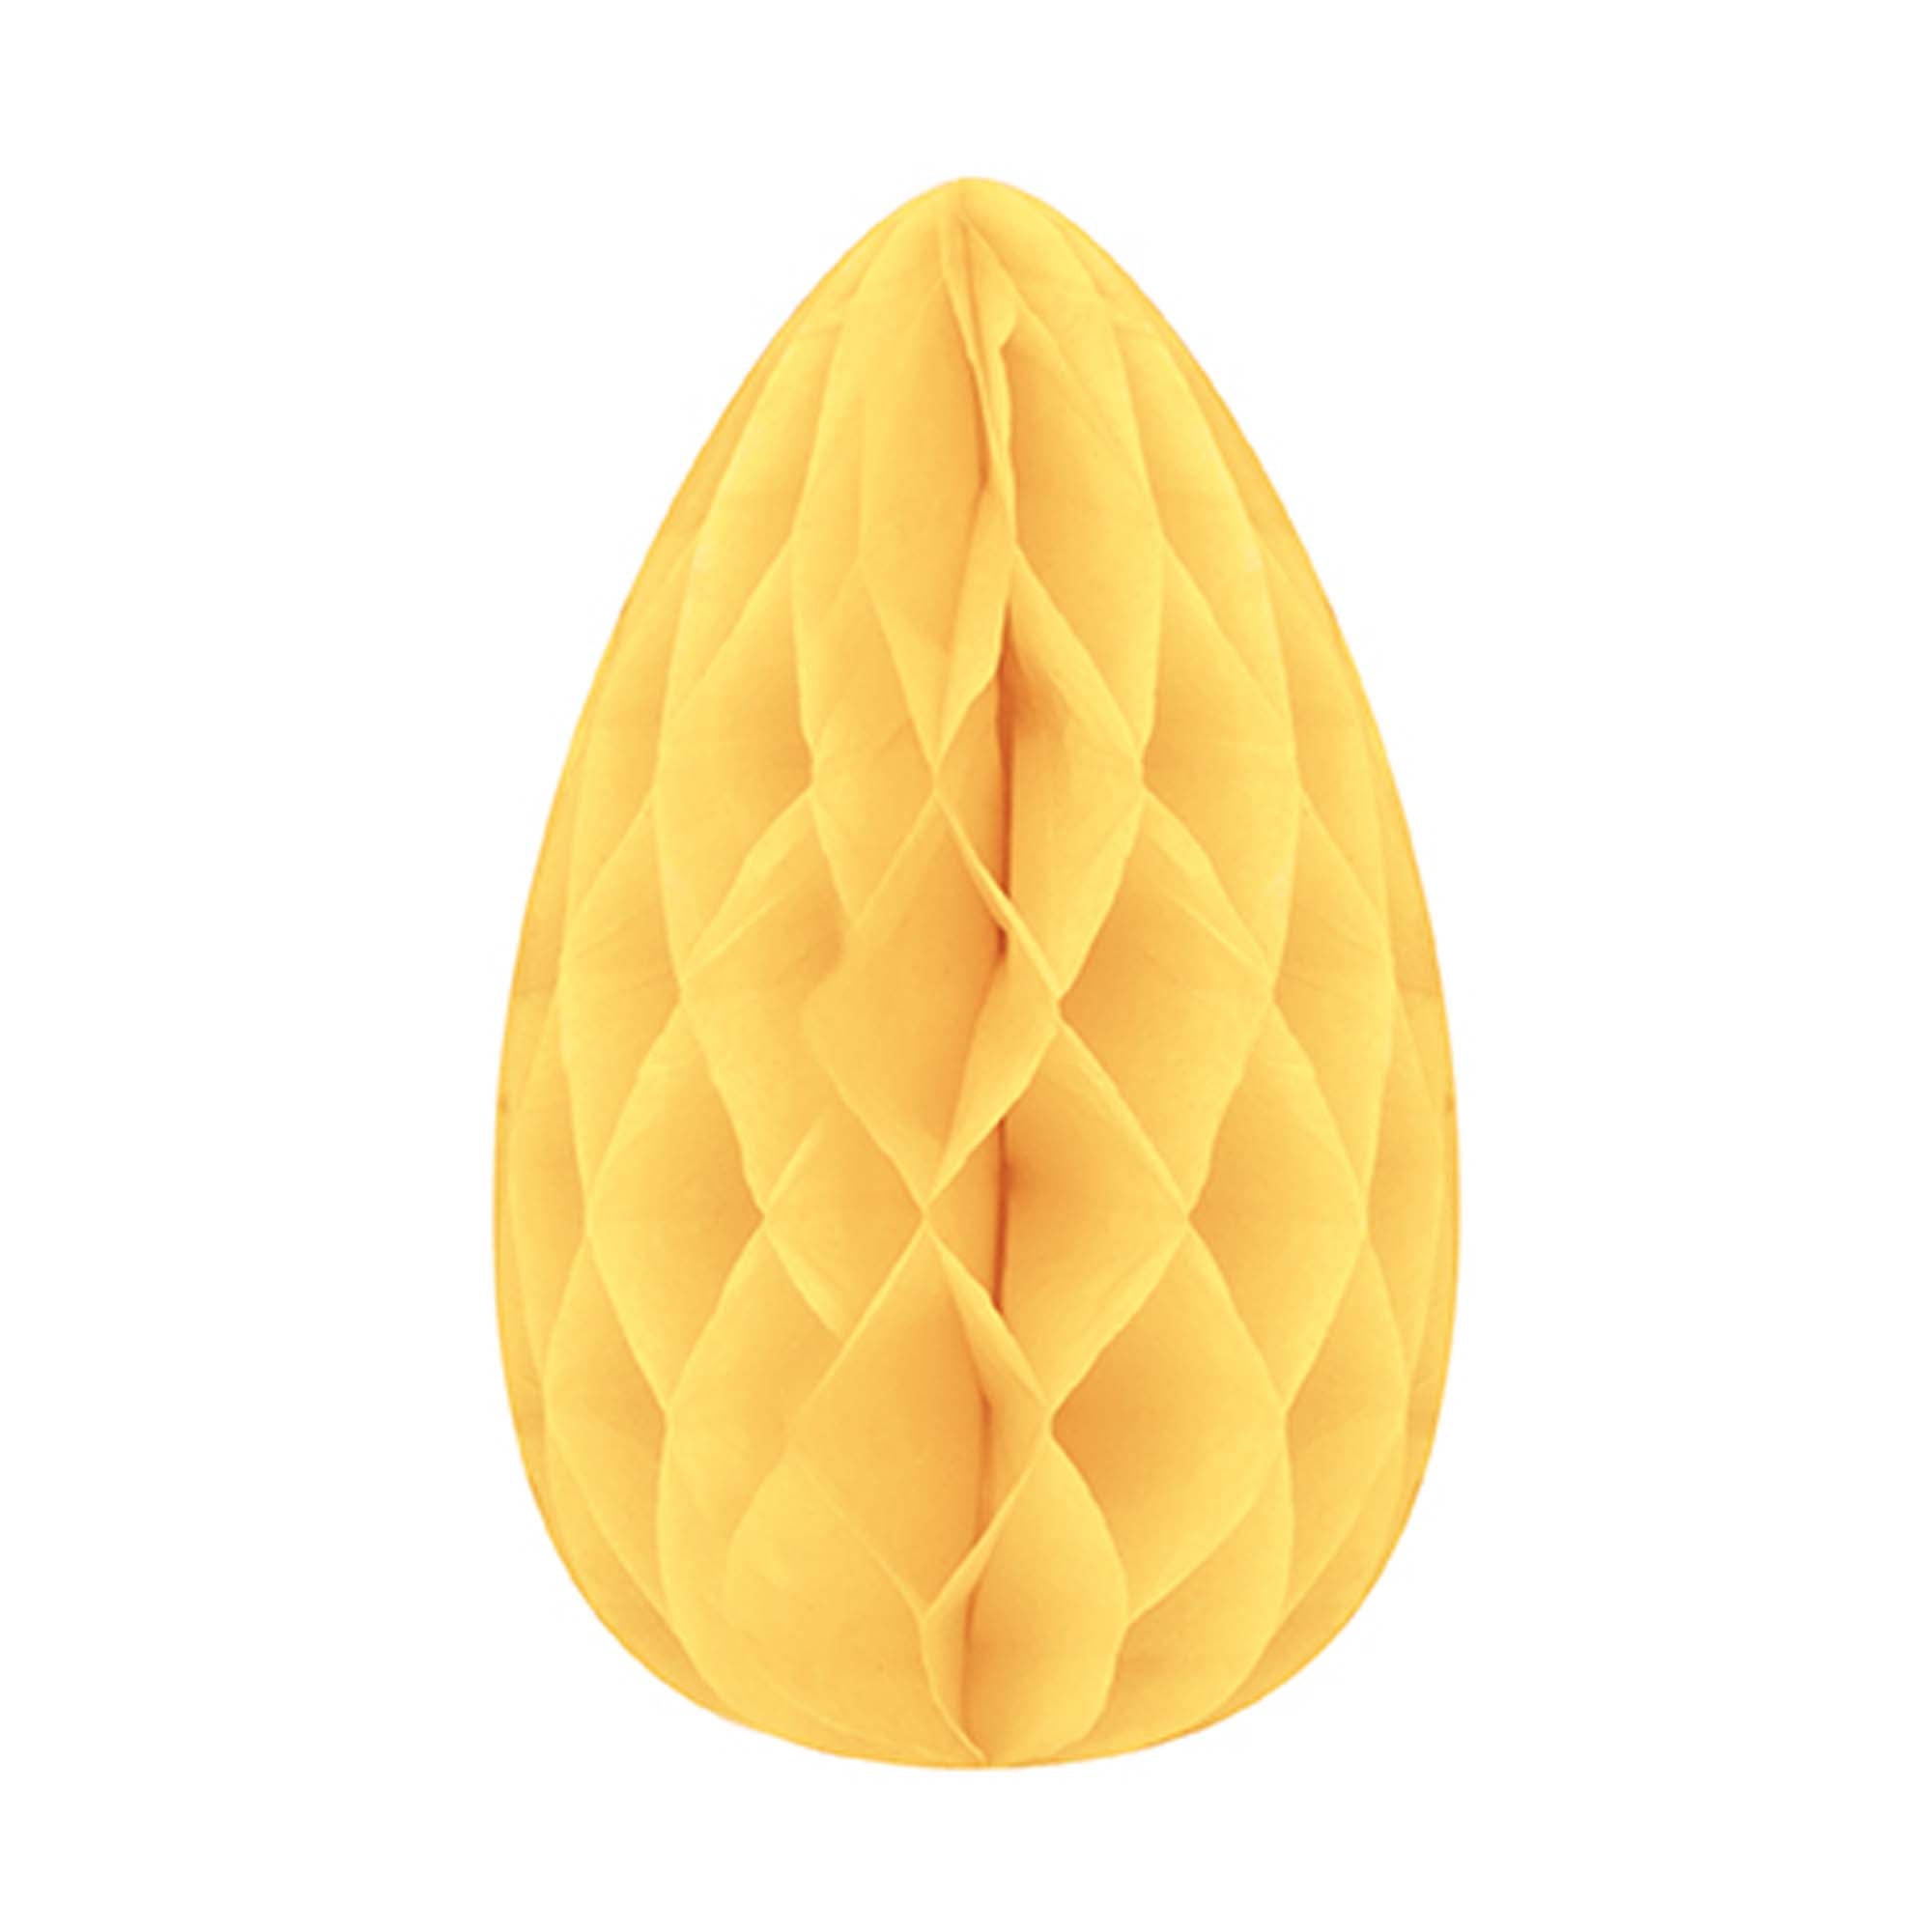 Dainty Easter Honeycomb Centerpriece Decoration Kit, 5 Count